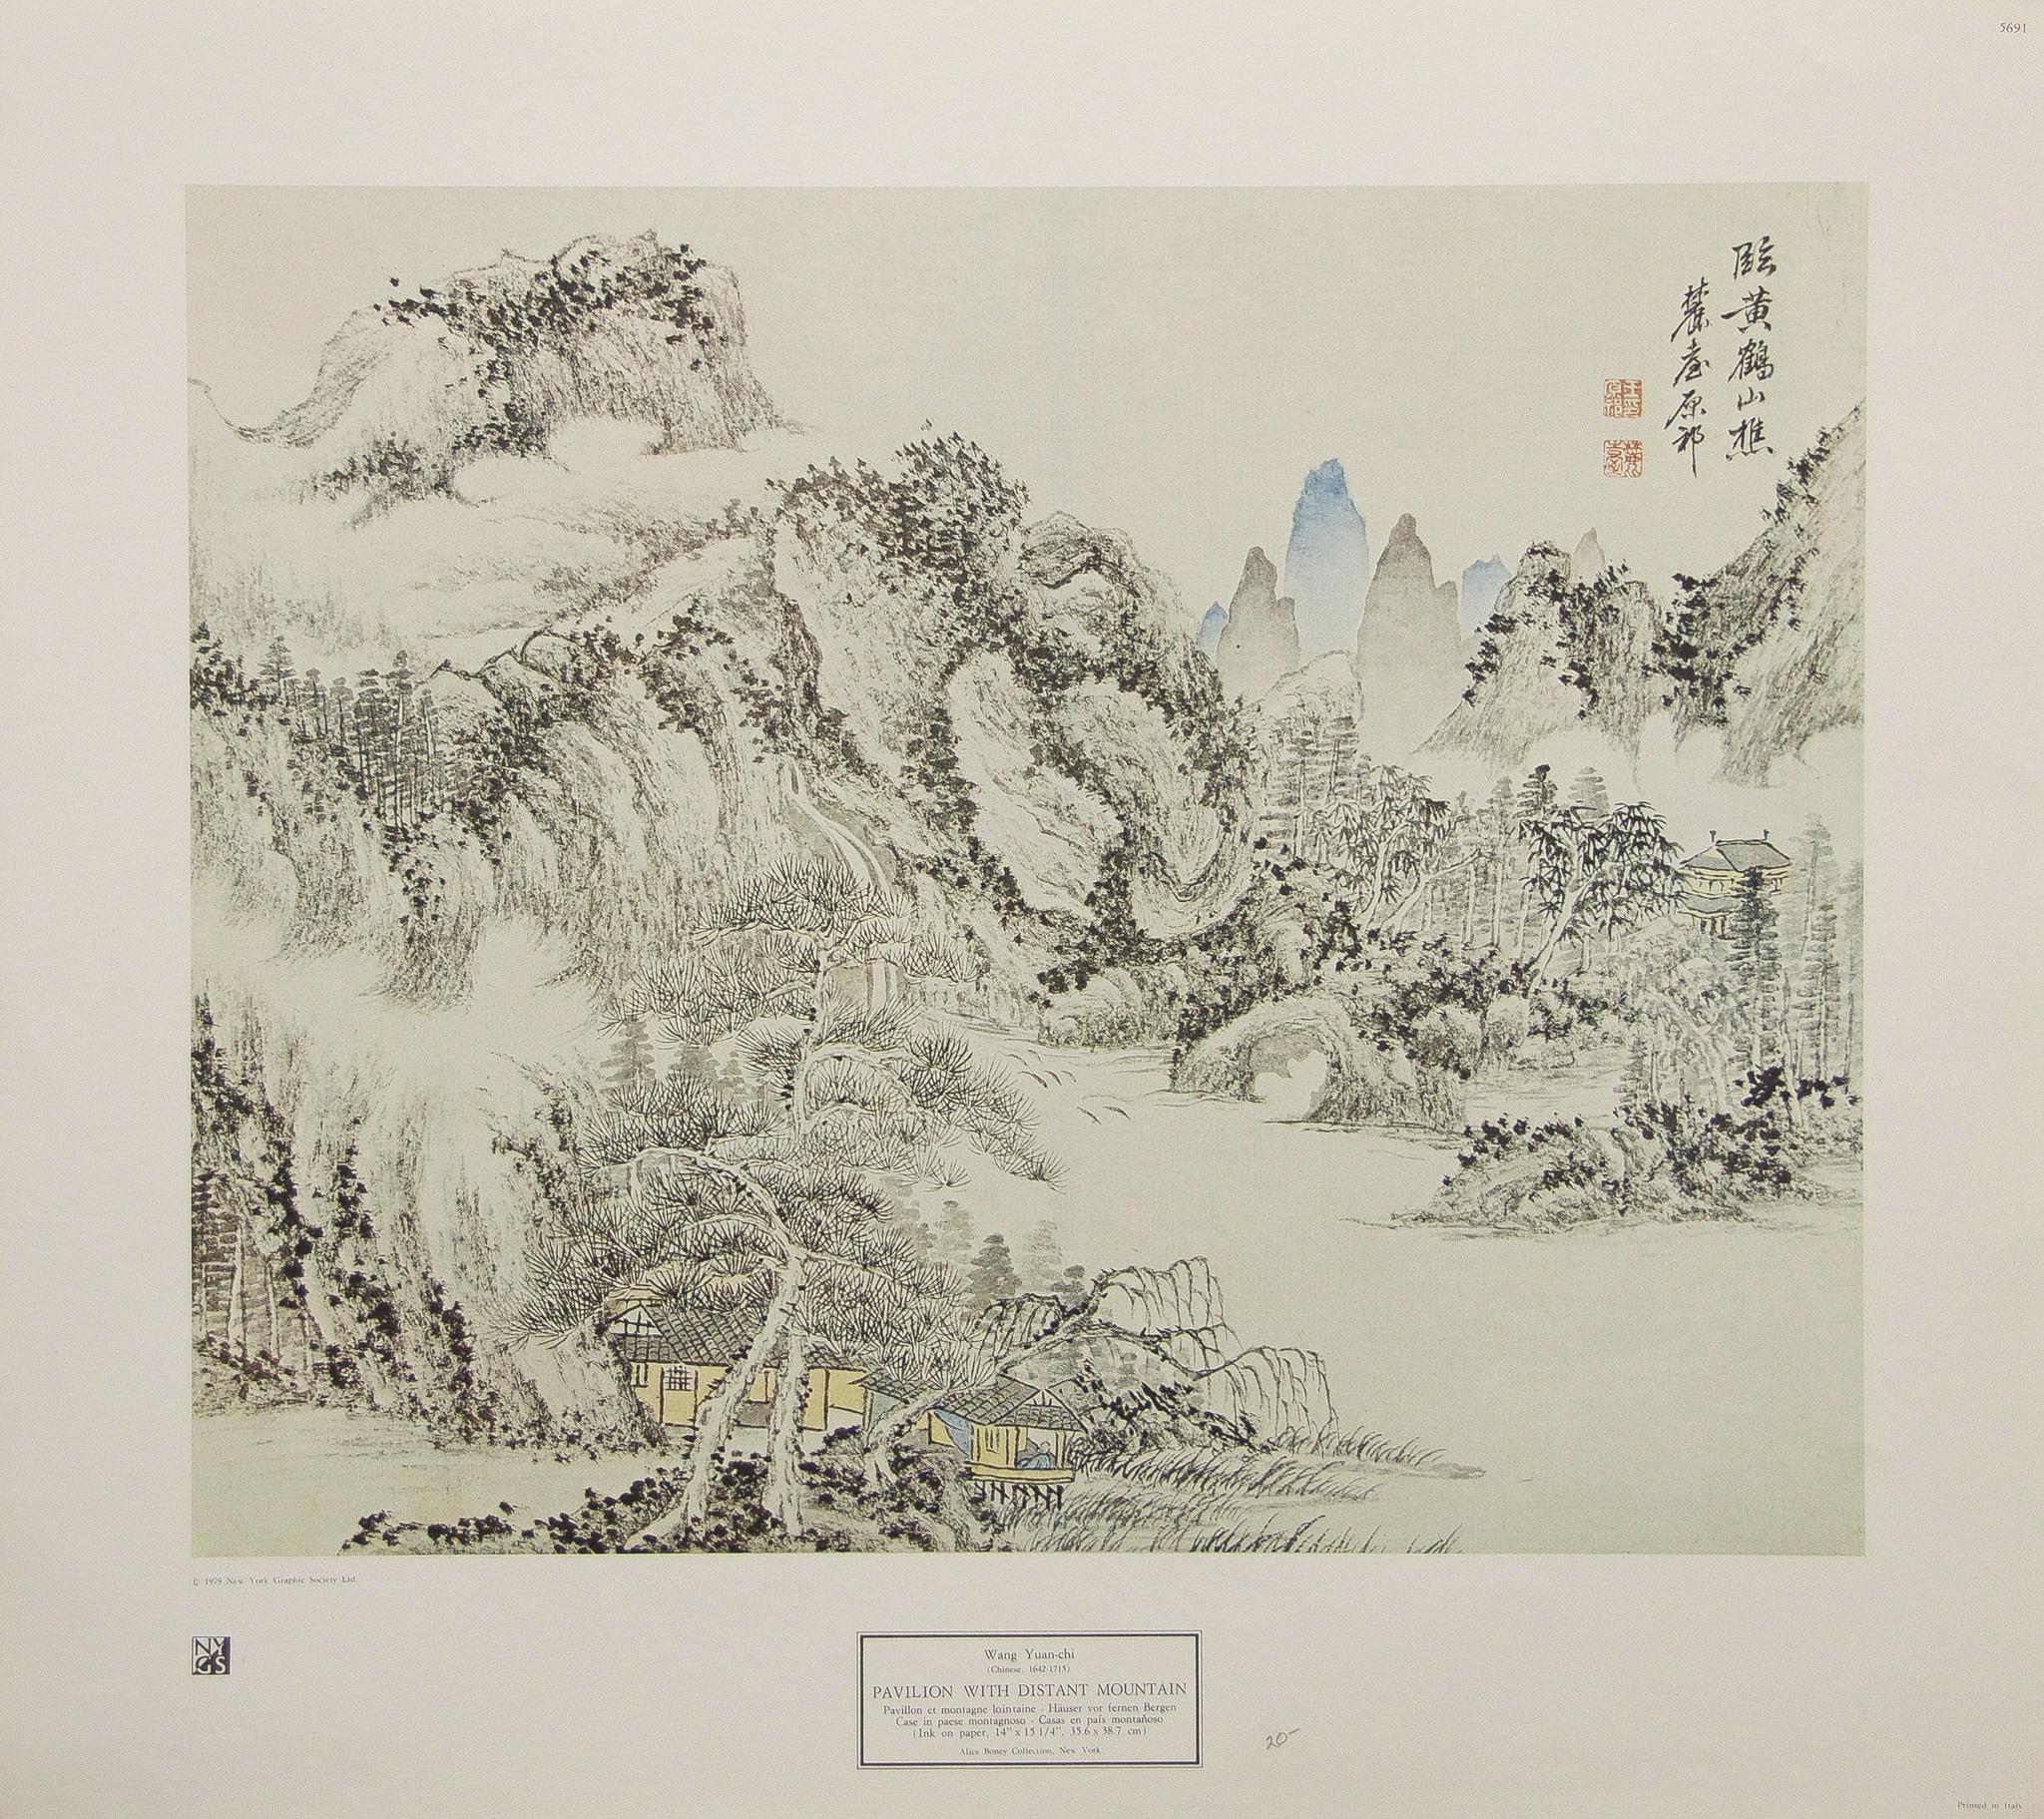 Wang Yuan-Chi Landscape Print - "Pavillon with Distant Mountain" by Wang Yuan-chi, Printed in Italy.